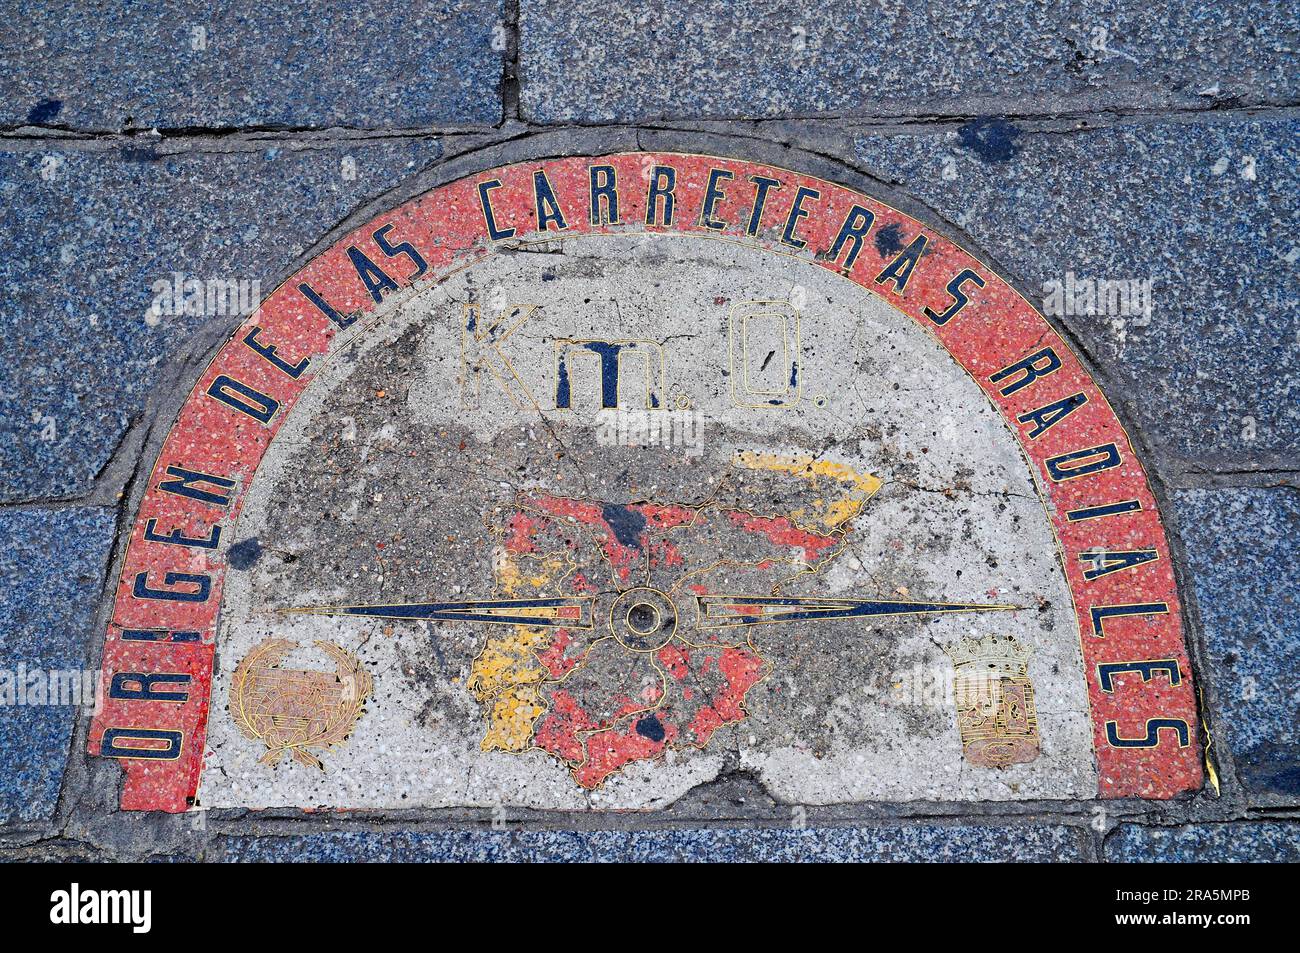 Zero kilometre stone, origen carreteras radiales, kilometro cero, pavement in front of post office building, Puerta del Sol, Madrid, Spain Stock Photo